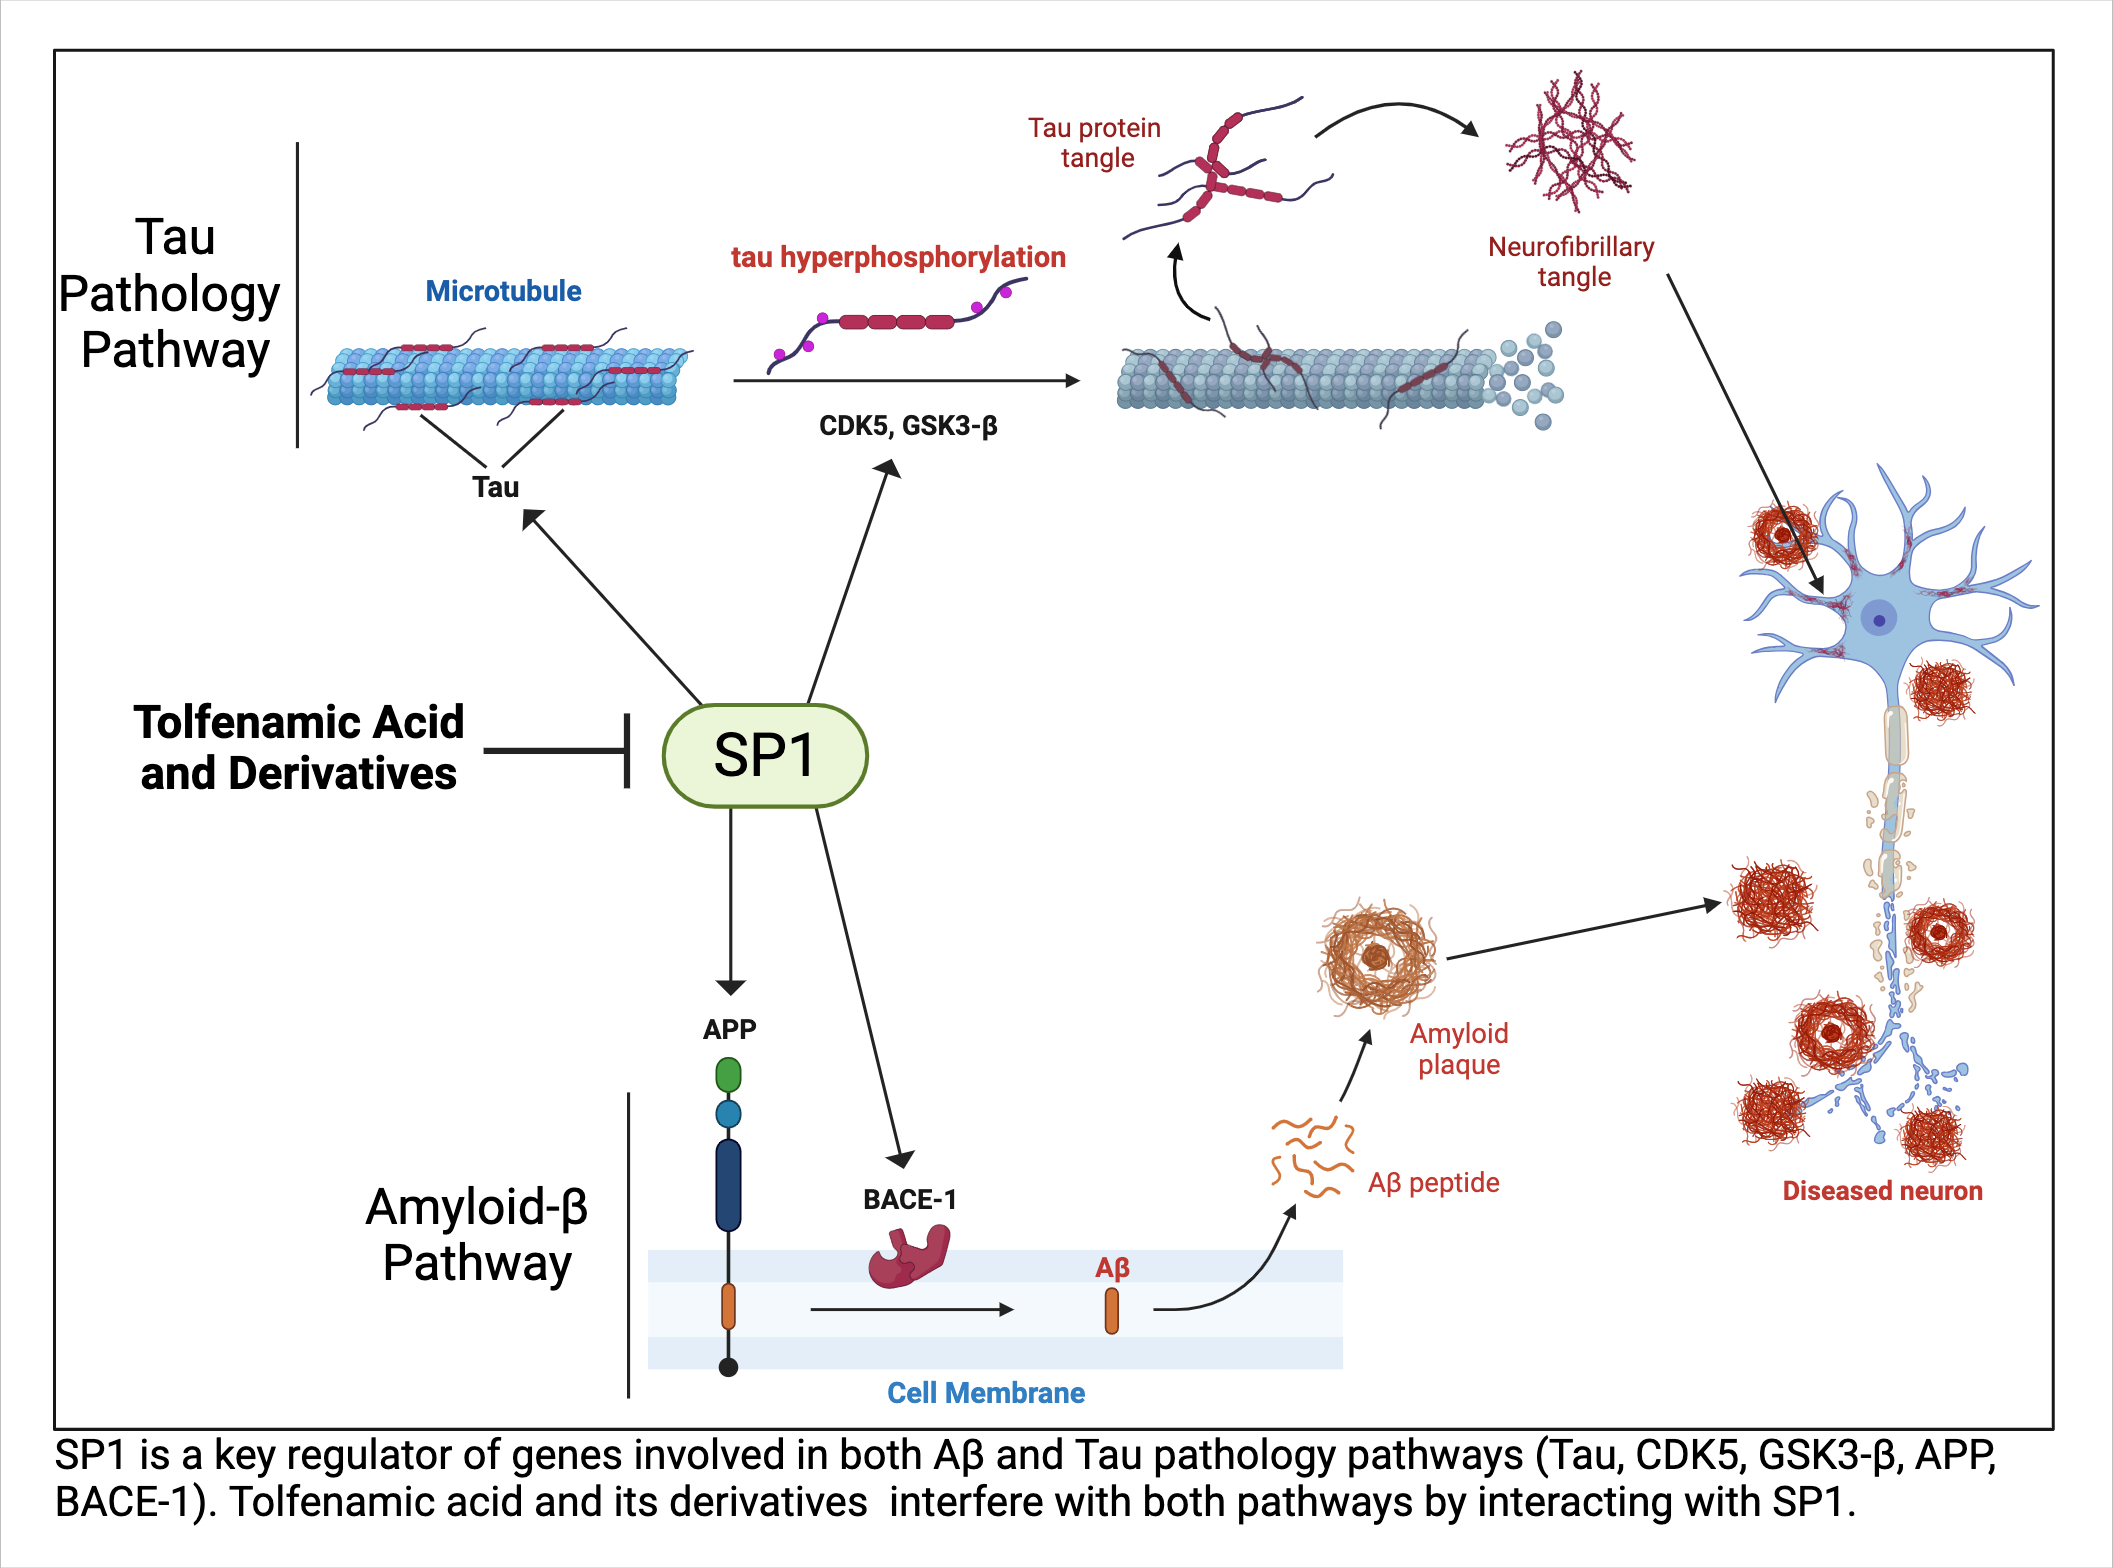 SP1 is a key regulator of genes